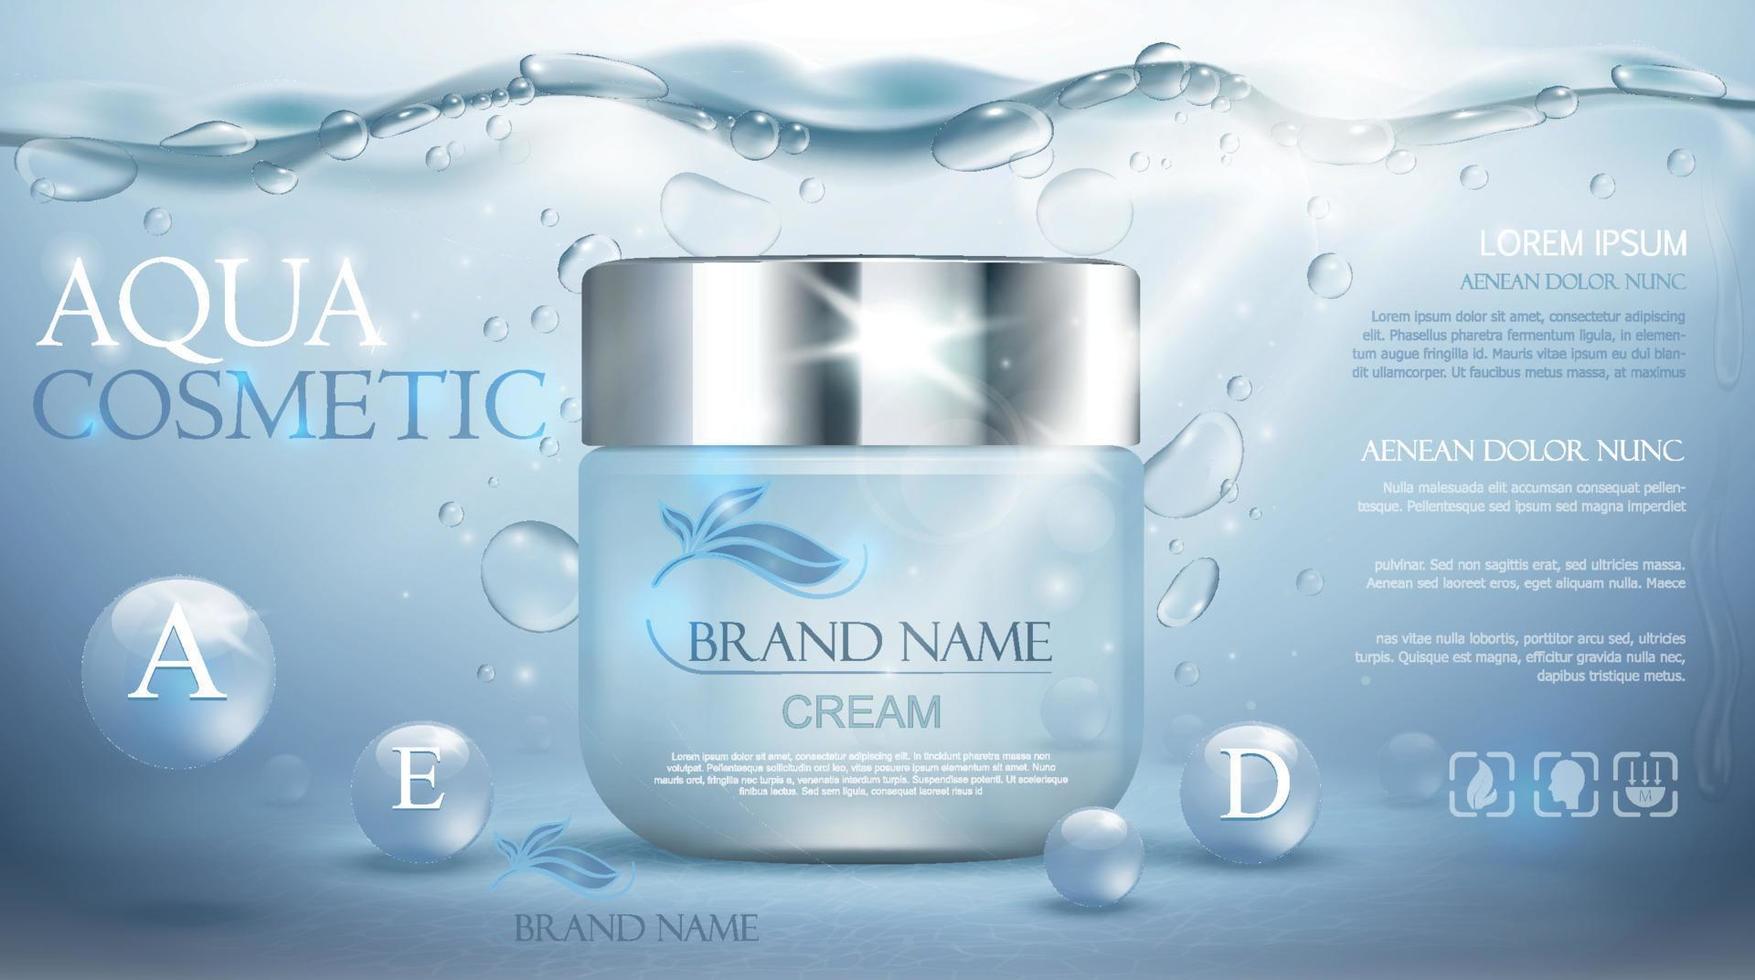 Aqua cream moisturizing cosmetic. Advertising realistic underwater blue template. Skincare promotion. Hydrating facial lotion. Vector illustration